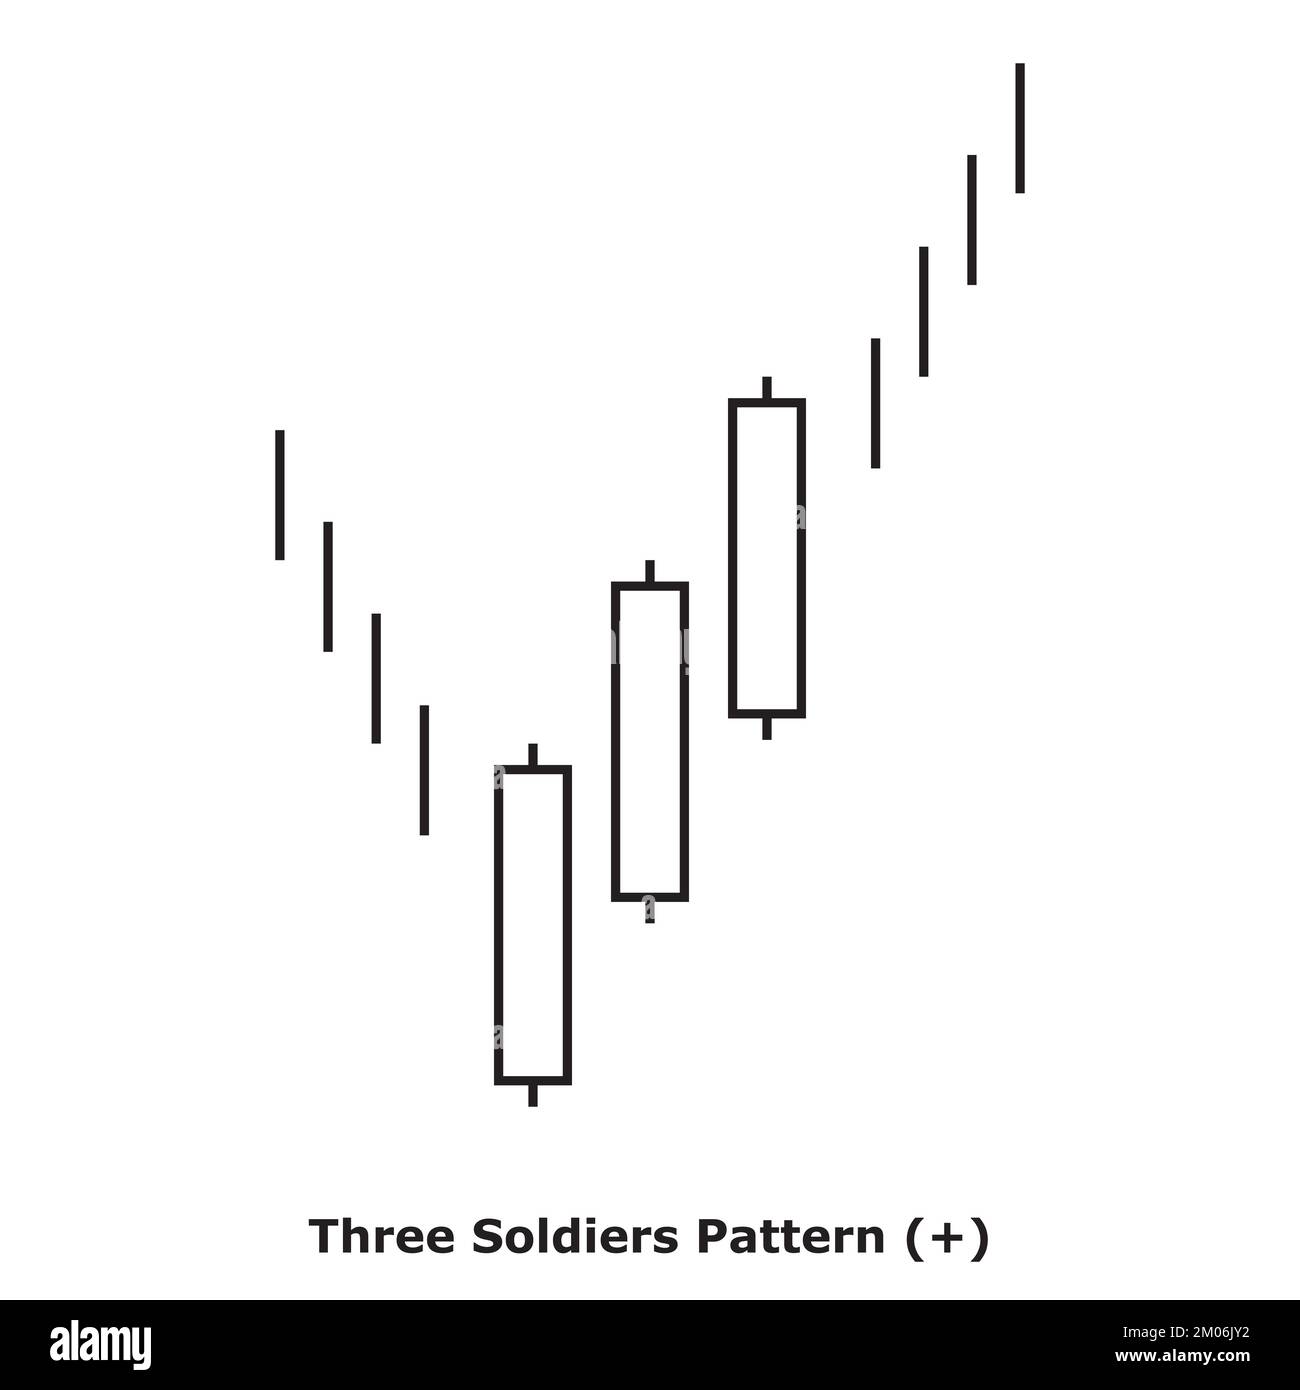 Three Soldiers Pattern - Bullish - White & Black - Square - Bullish Reversal Japanese Candlestick Pattern - Triple Patterns Stock Vector